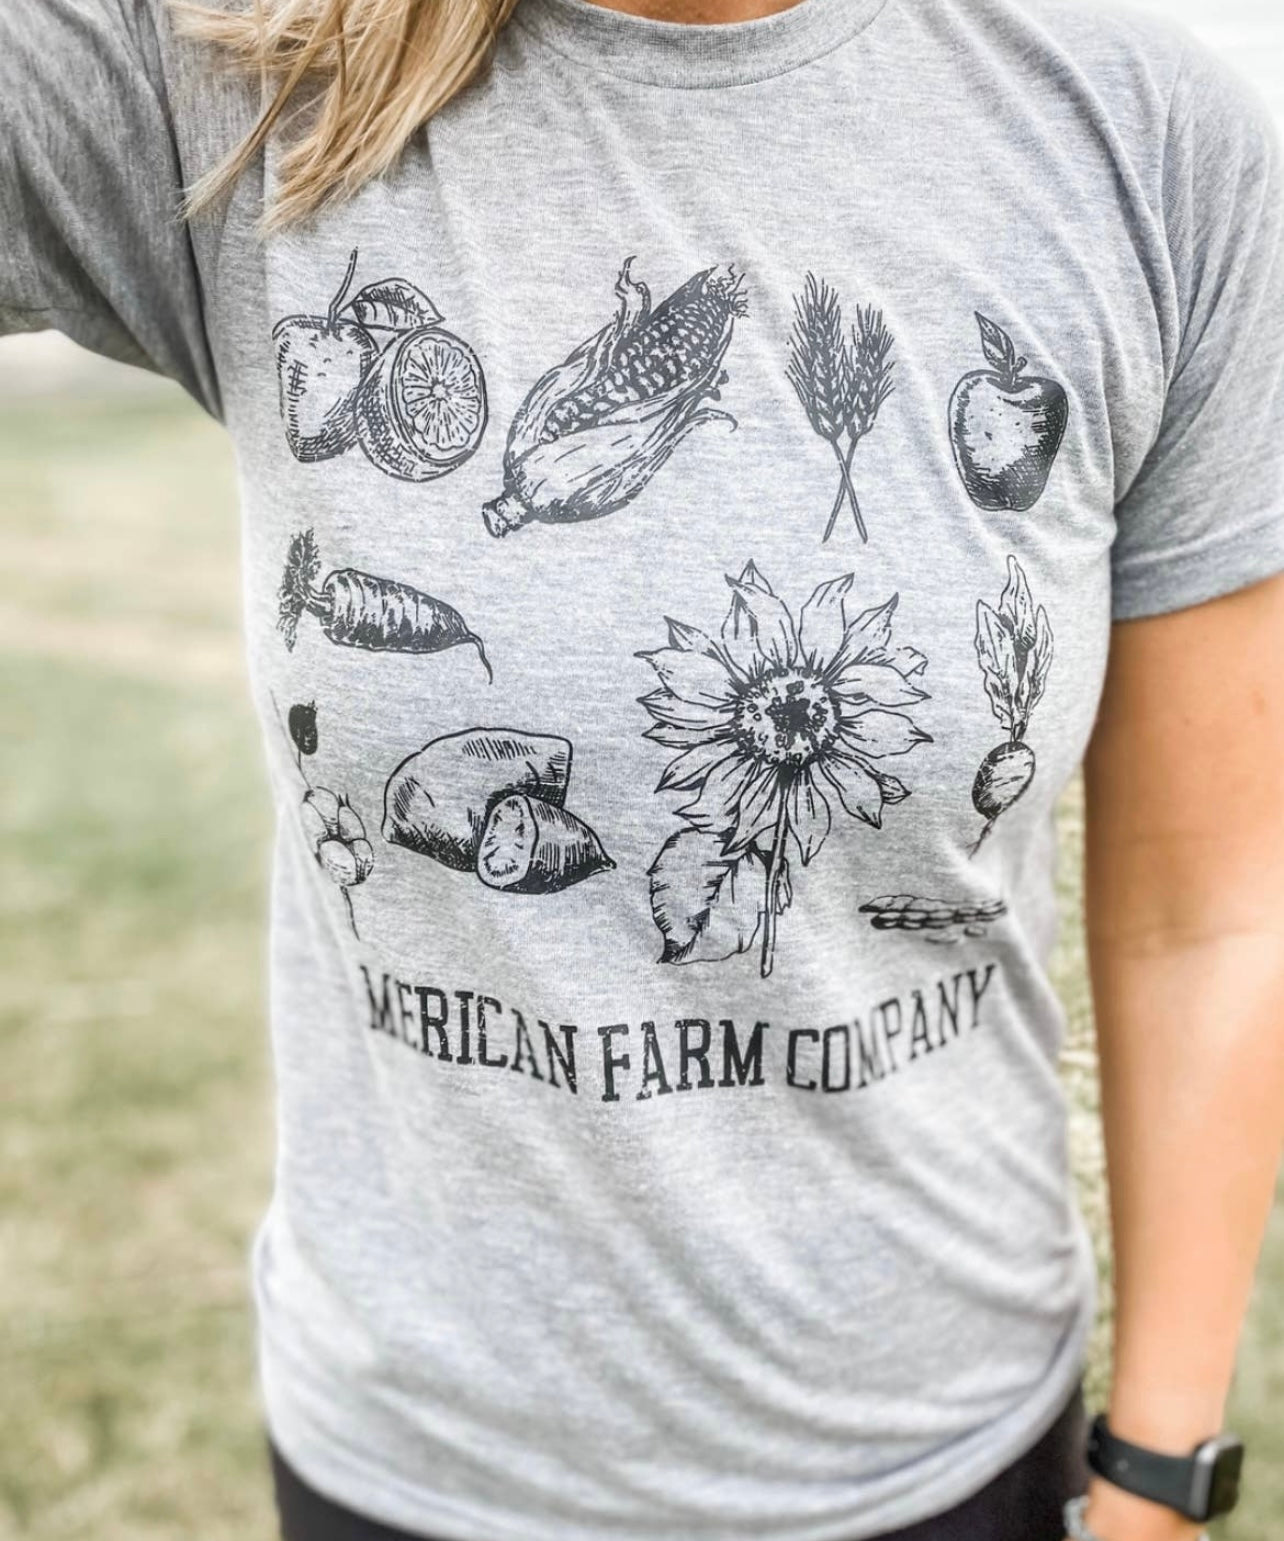 Crops by American Farm Company